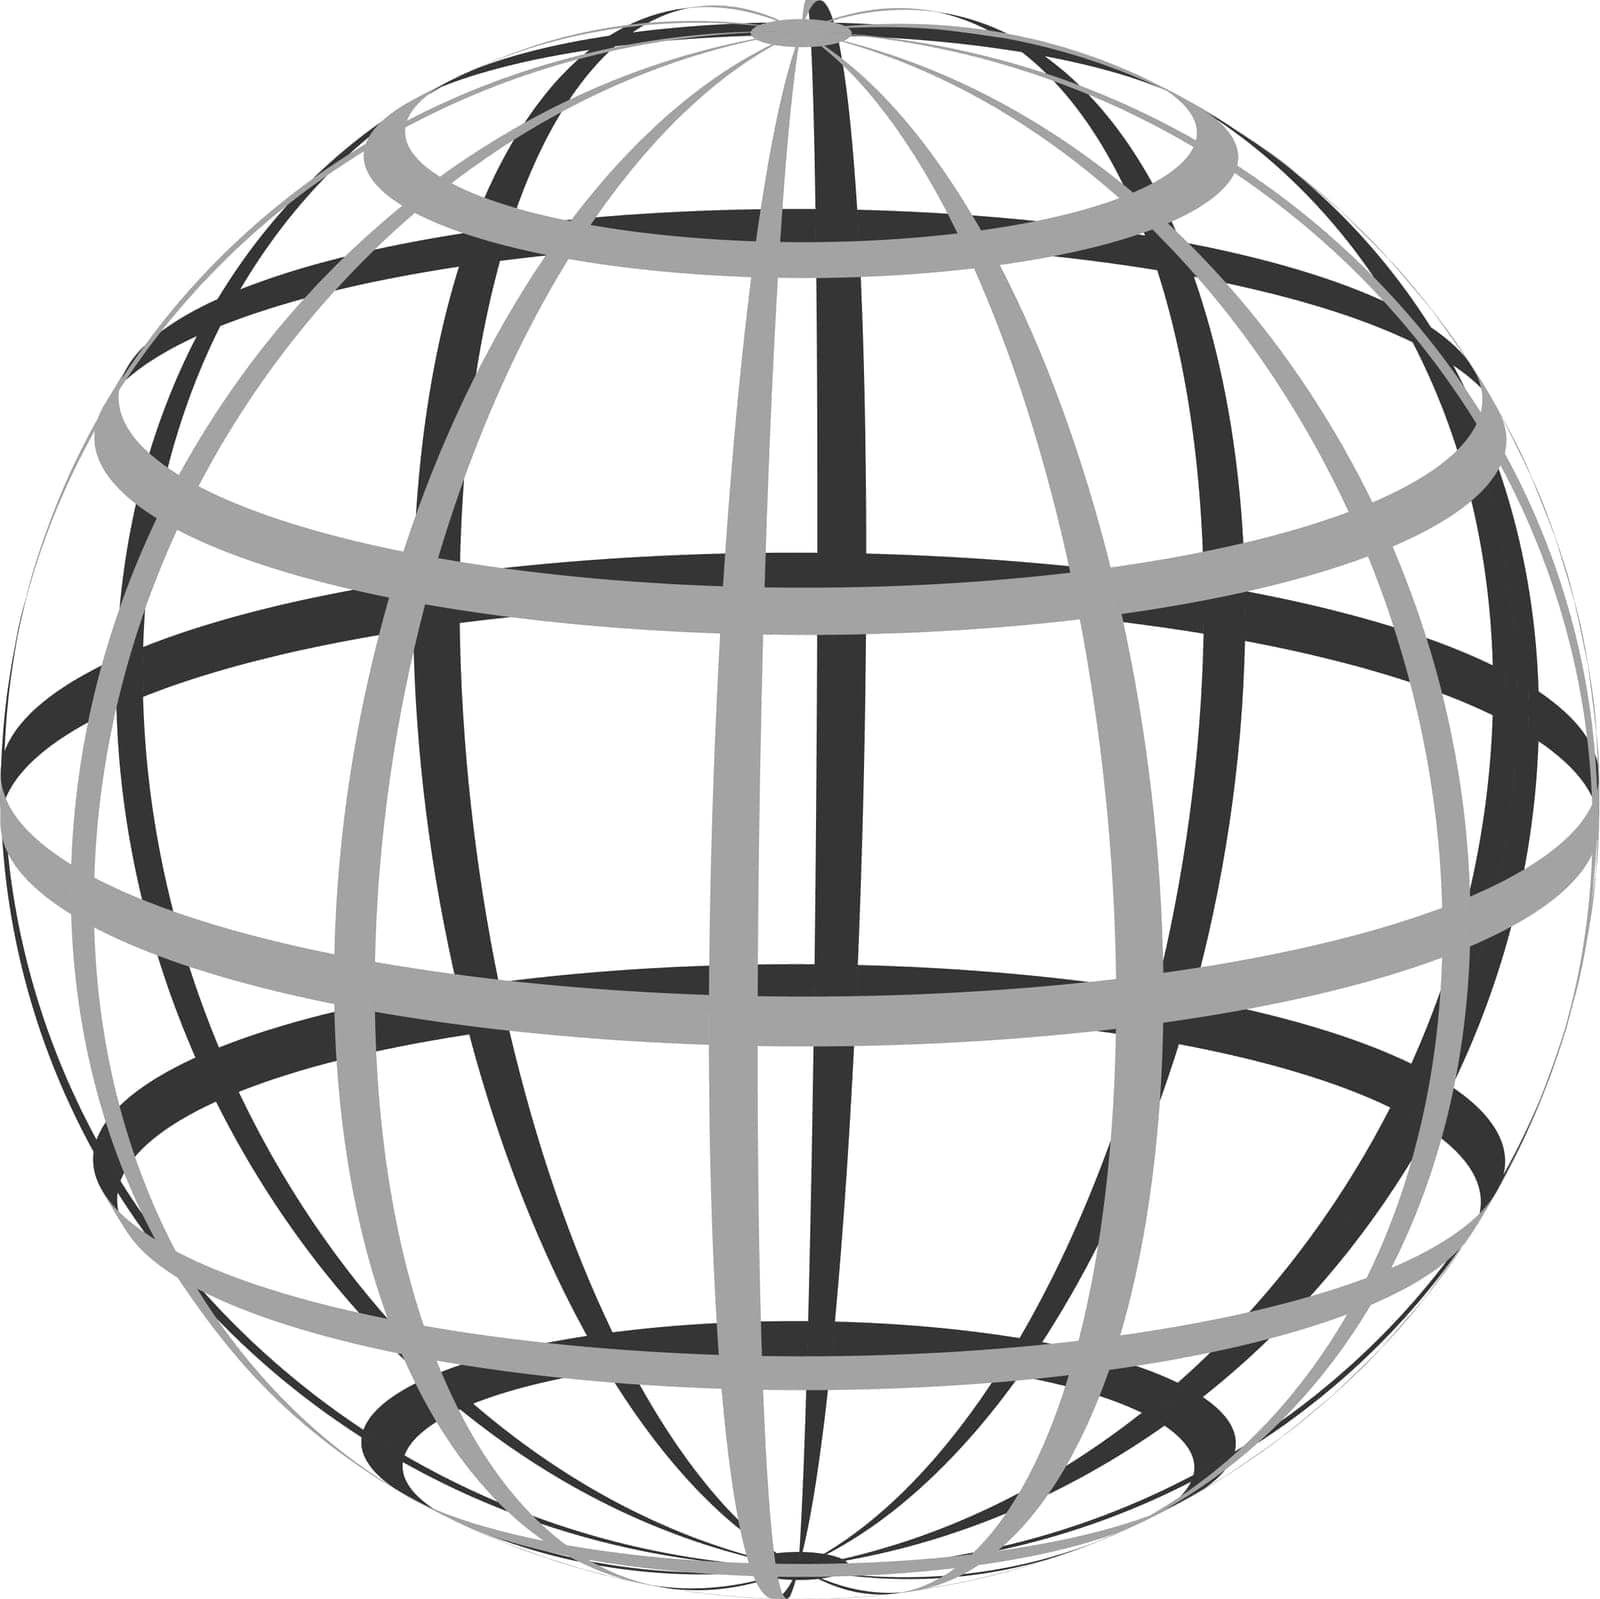 Hollow sphere coordinate grid parallel Meridian globe planet earth by koksikoks